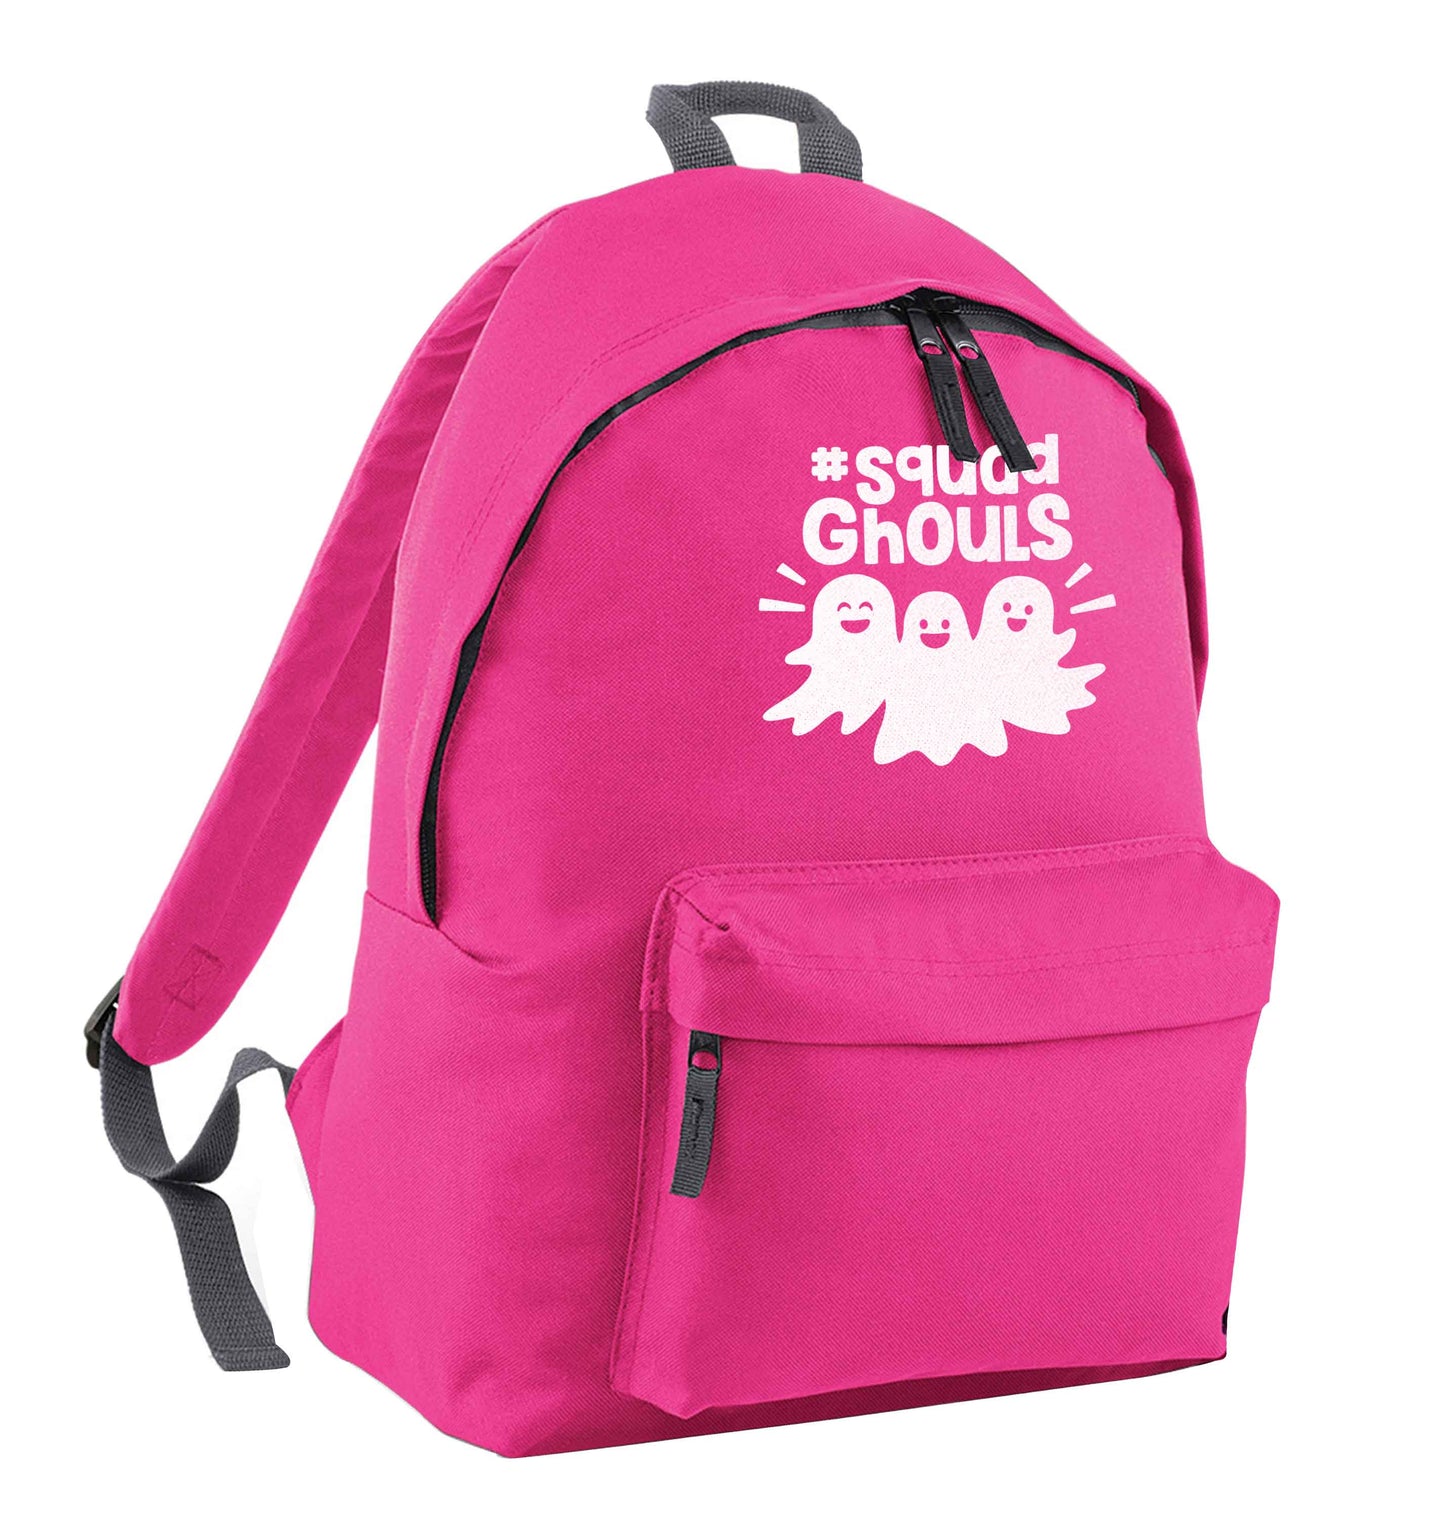 Squad ghouls Kit pink children's backpack